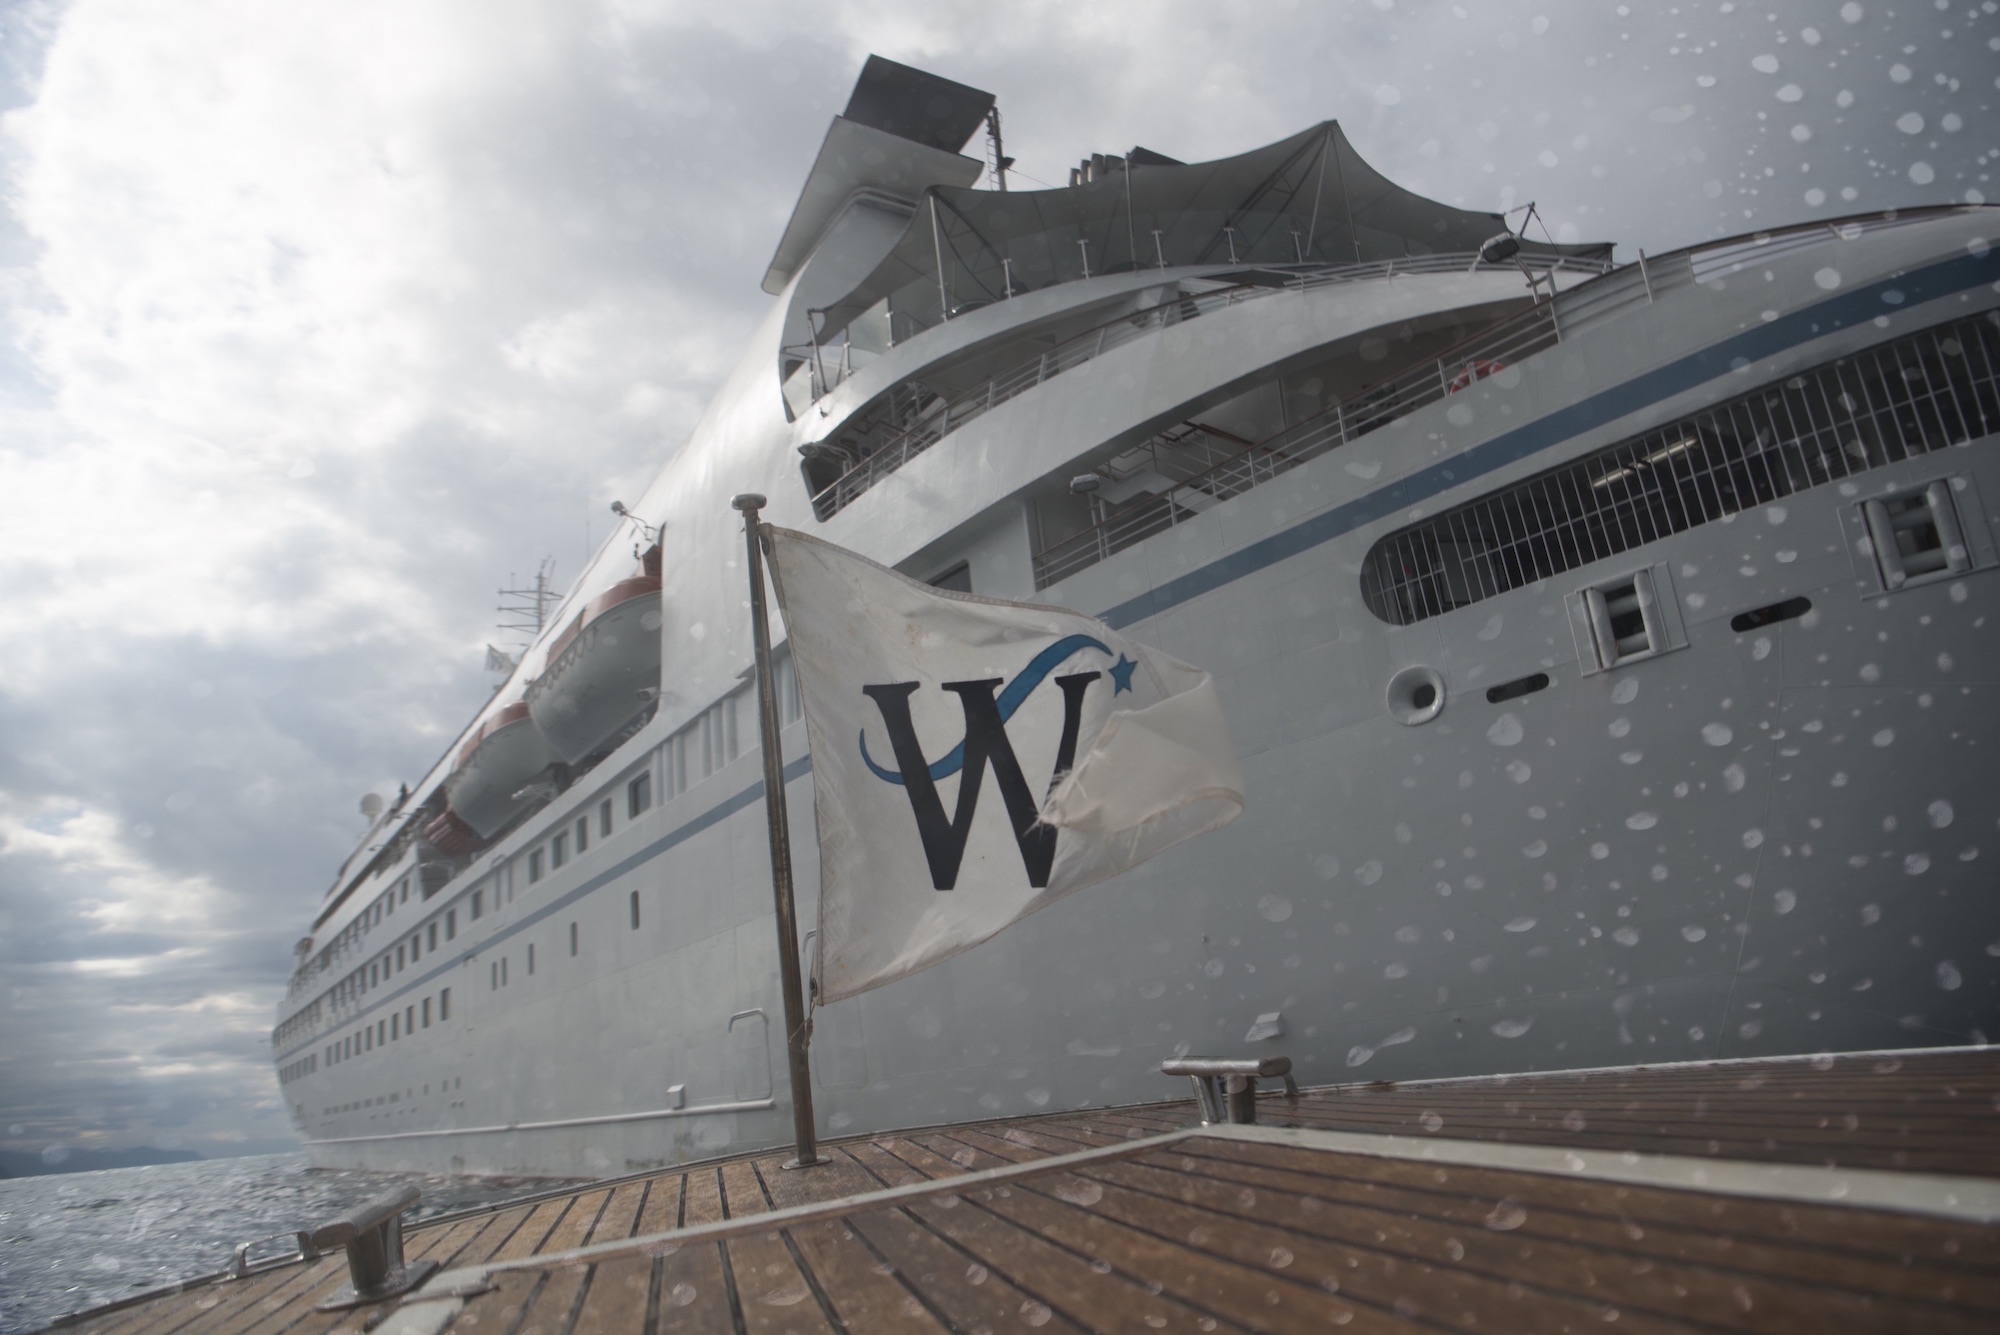 windstar cruises gaelic explorer